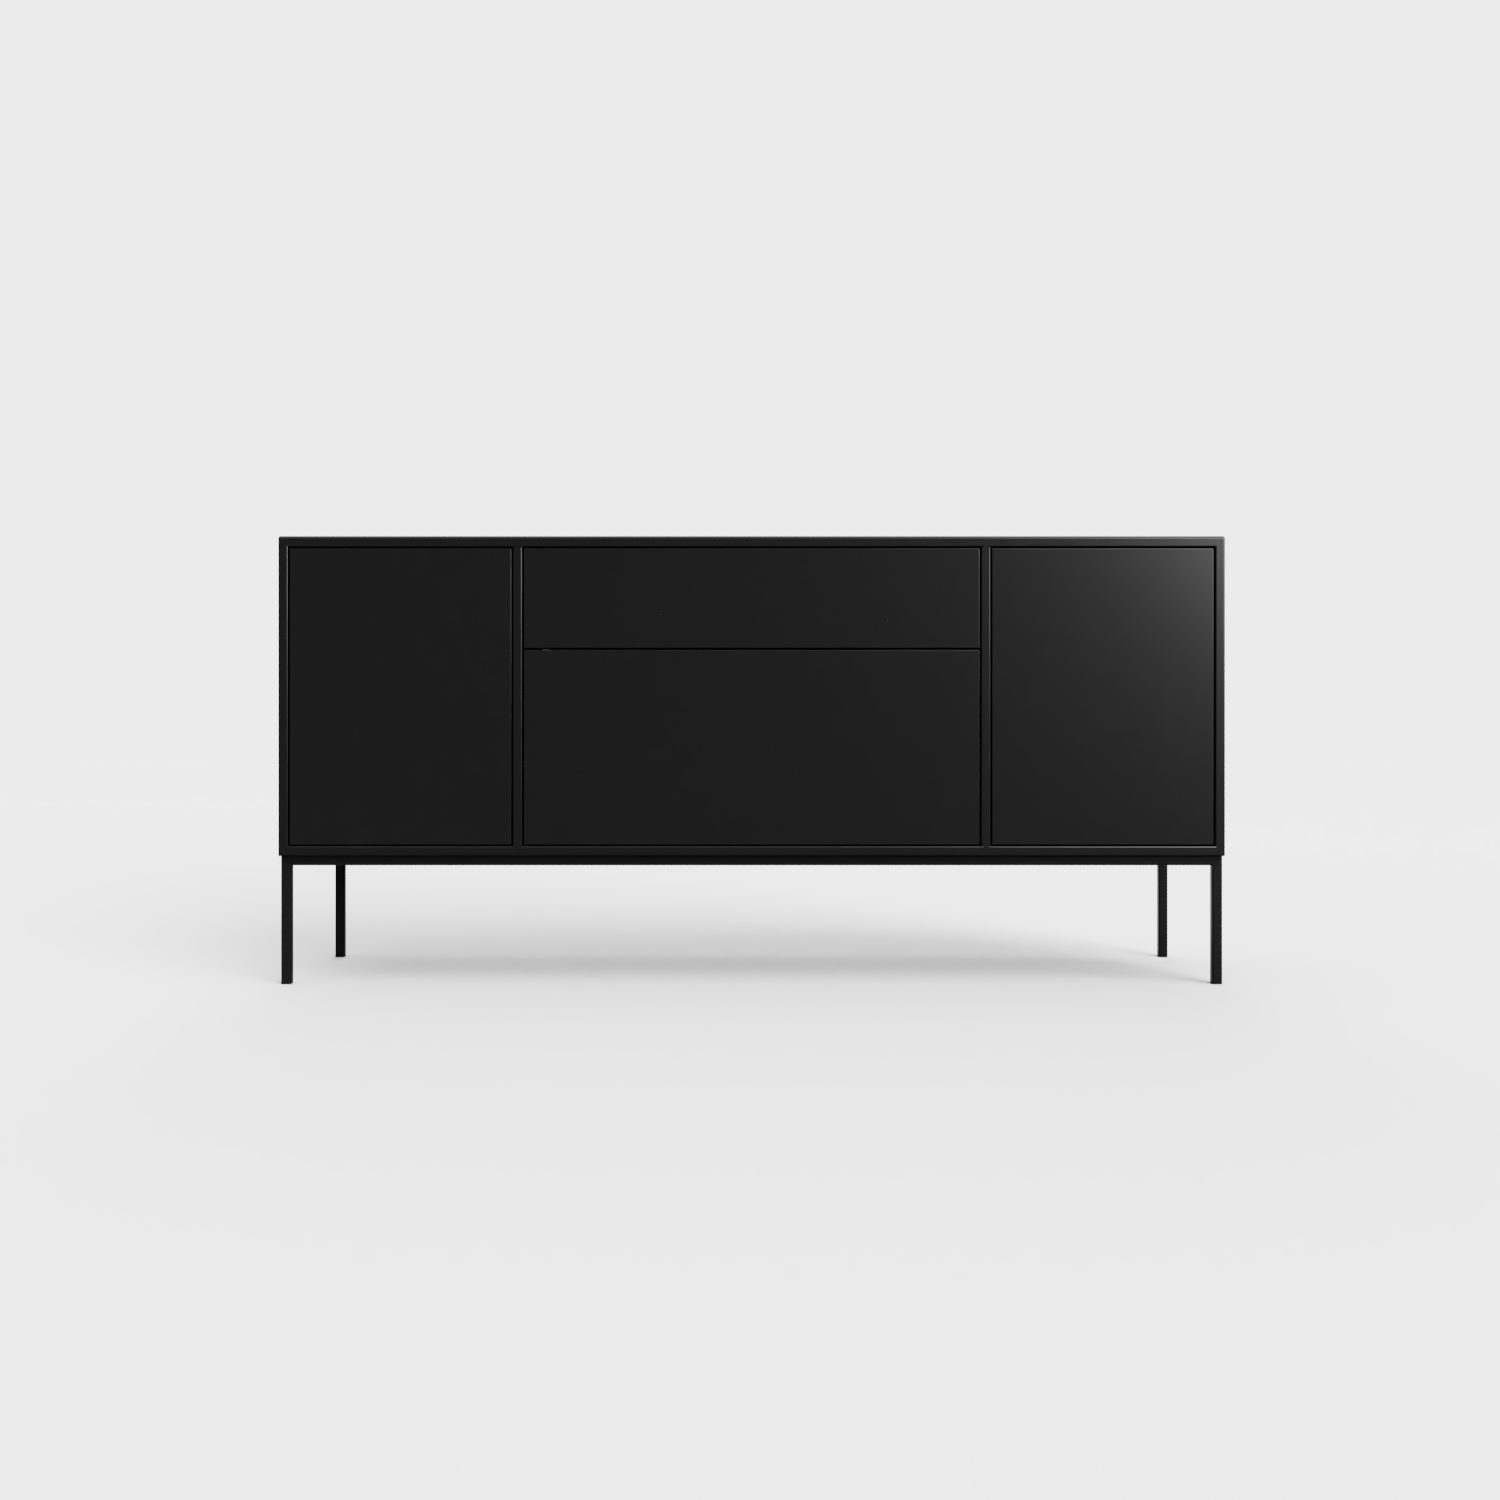 Arnika 02 Sideboard in Black color, powder-coated steel, elegant and modern piece of furniture for your living room